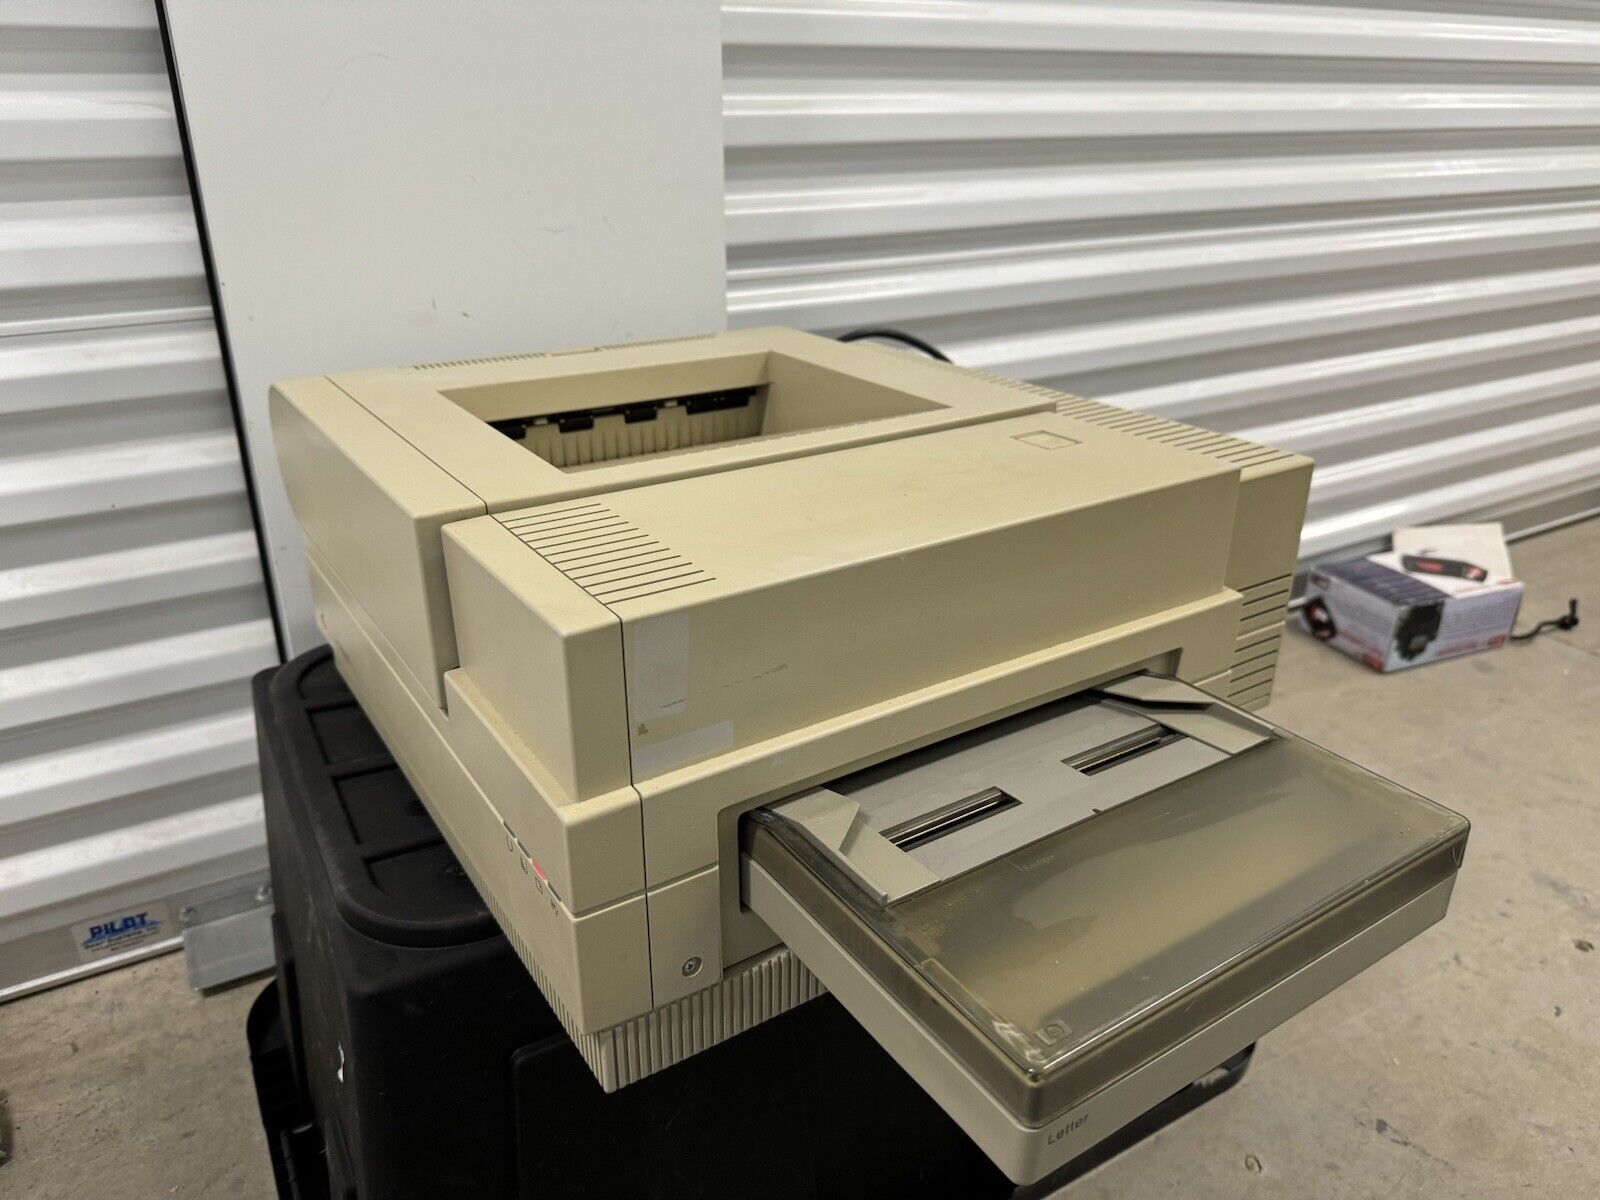 Vintage Apple Macintosh Mac Laser Writer IINT LaserWriter II nt Printer M6000